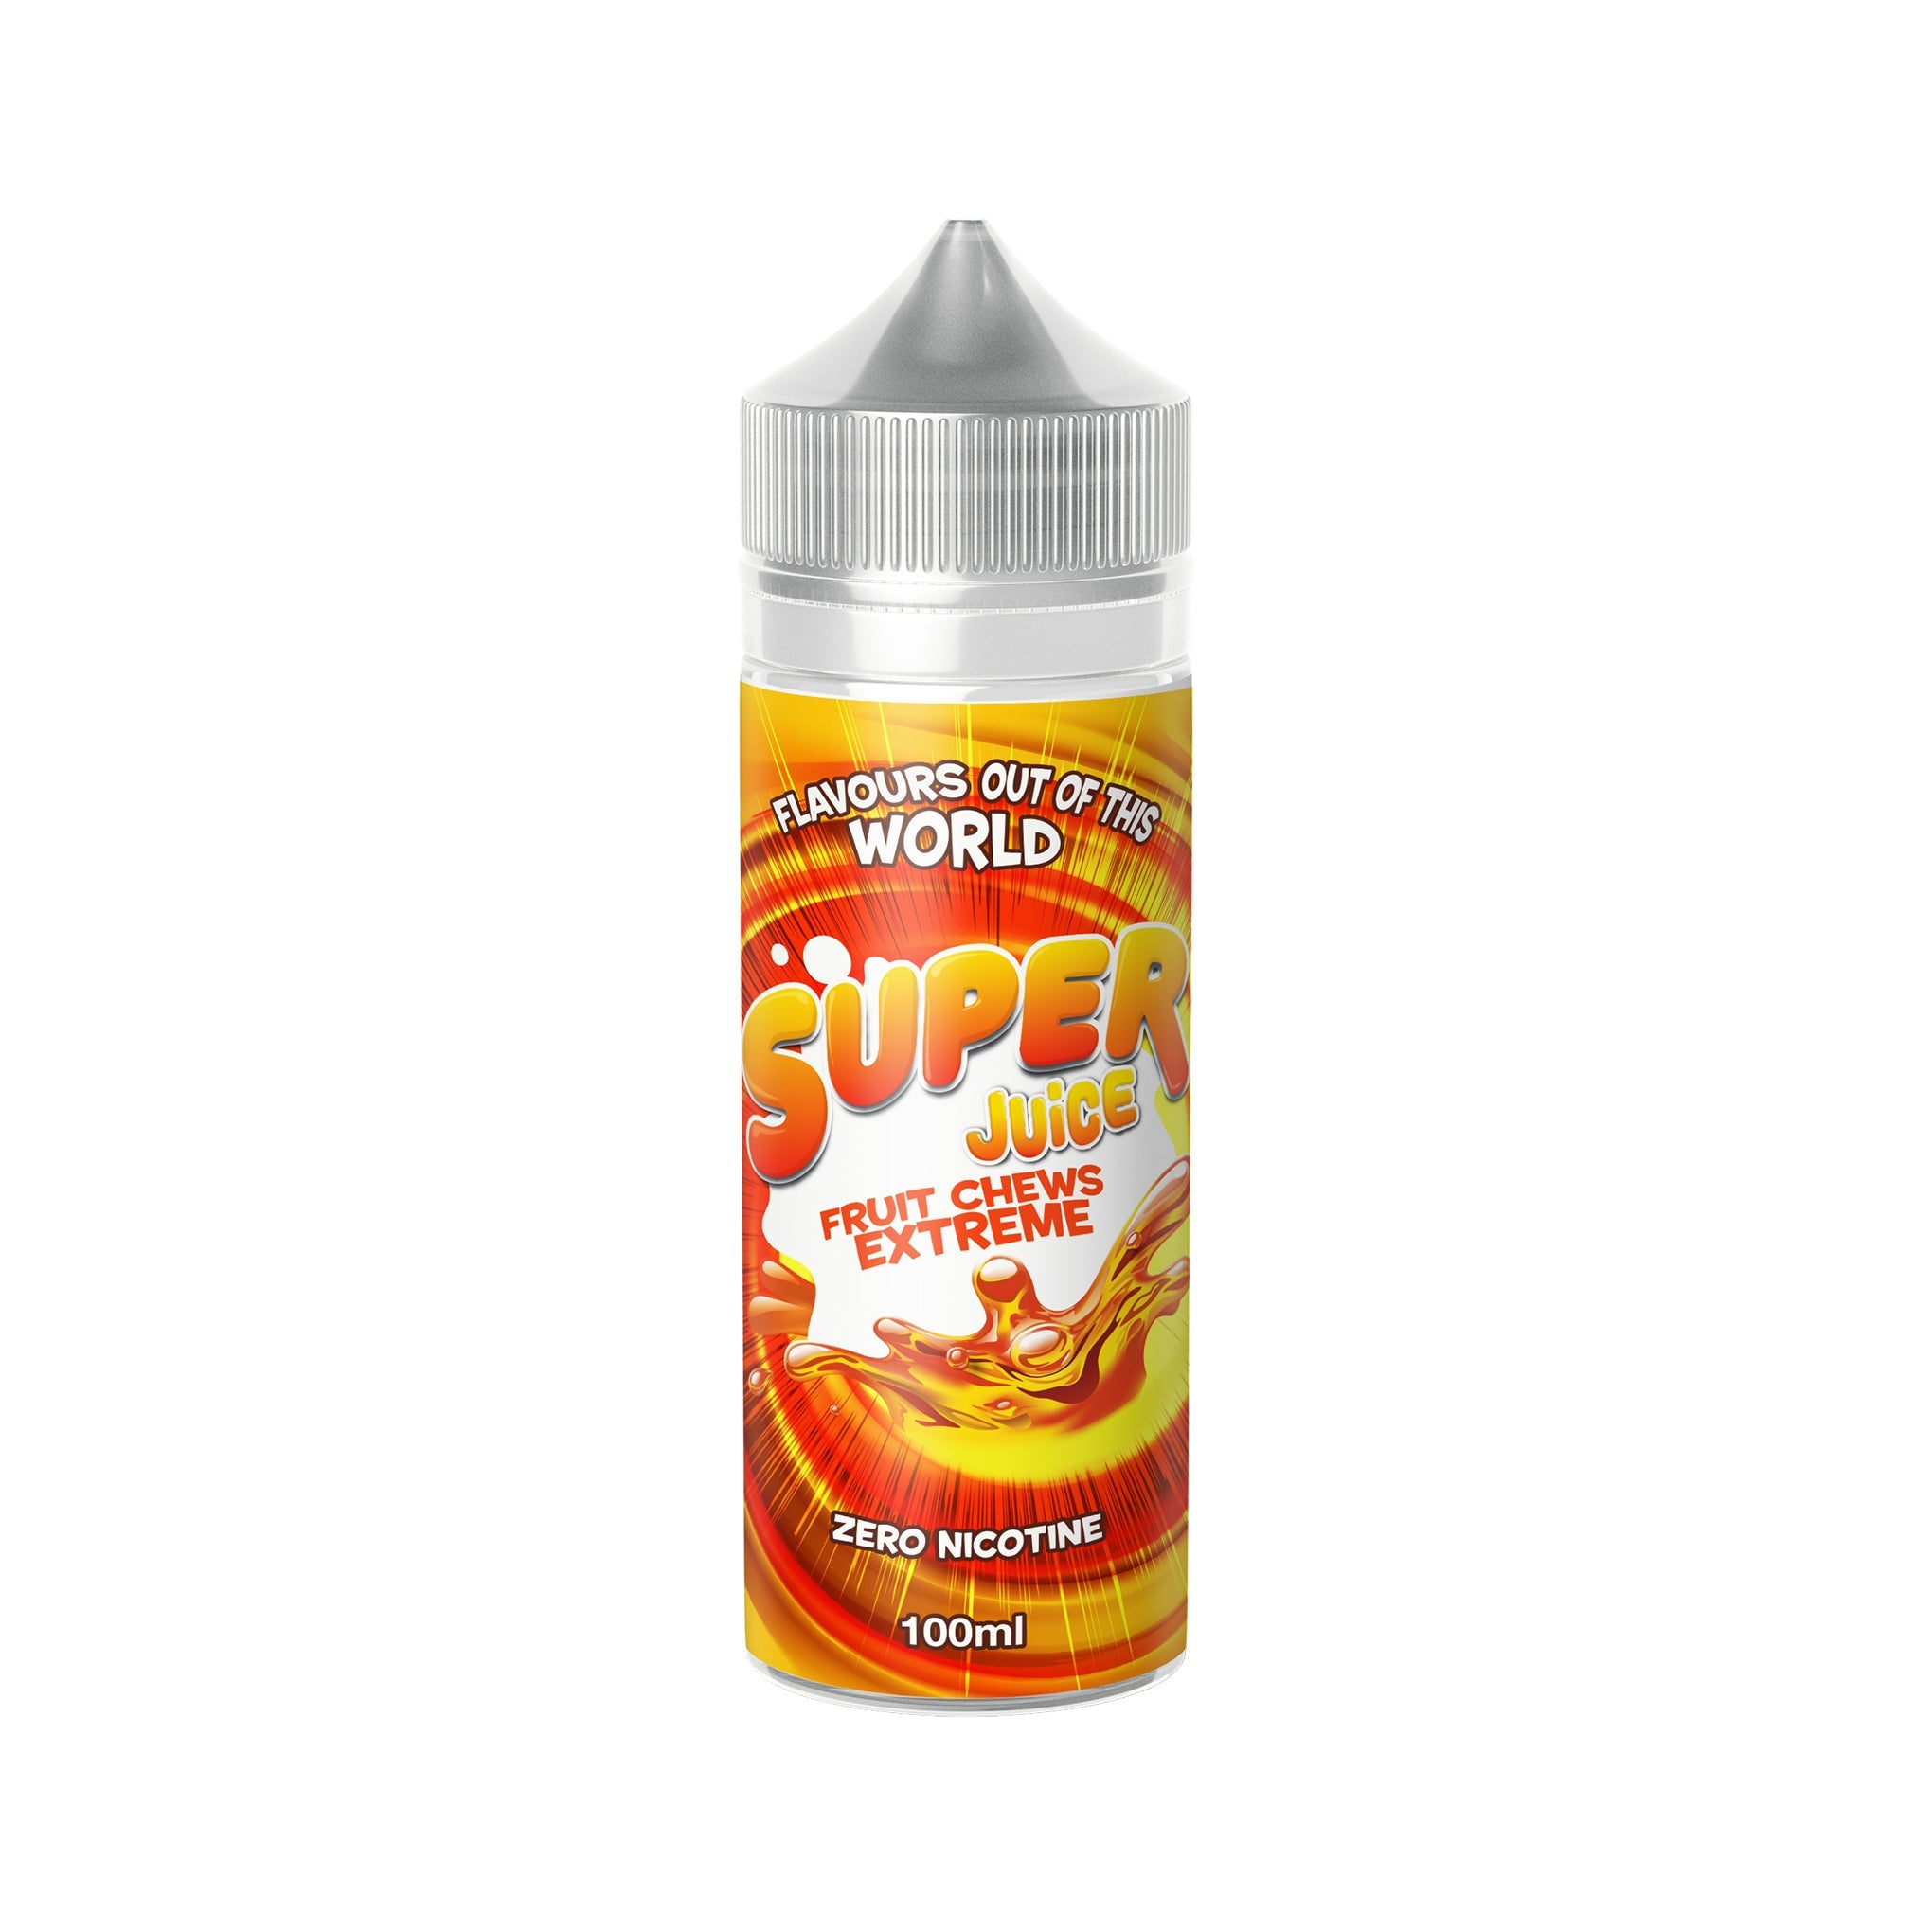 Super Juice Short Fill E-Liquid by IVG Fruit Chew Extreme 